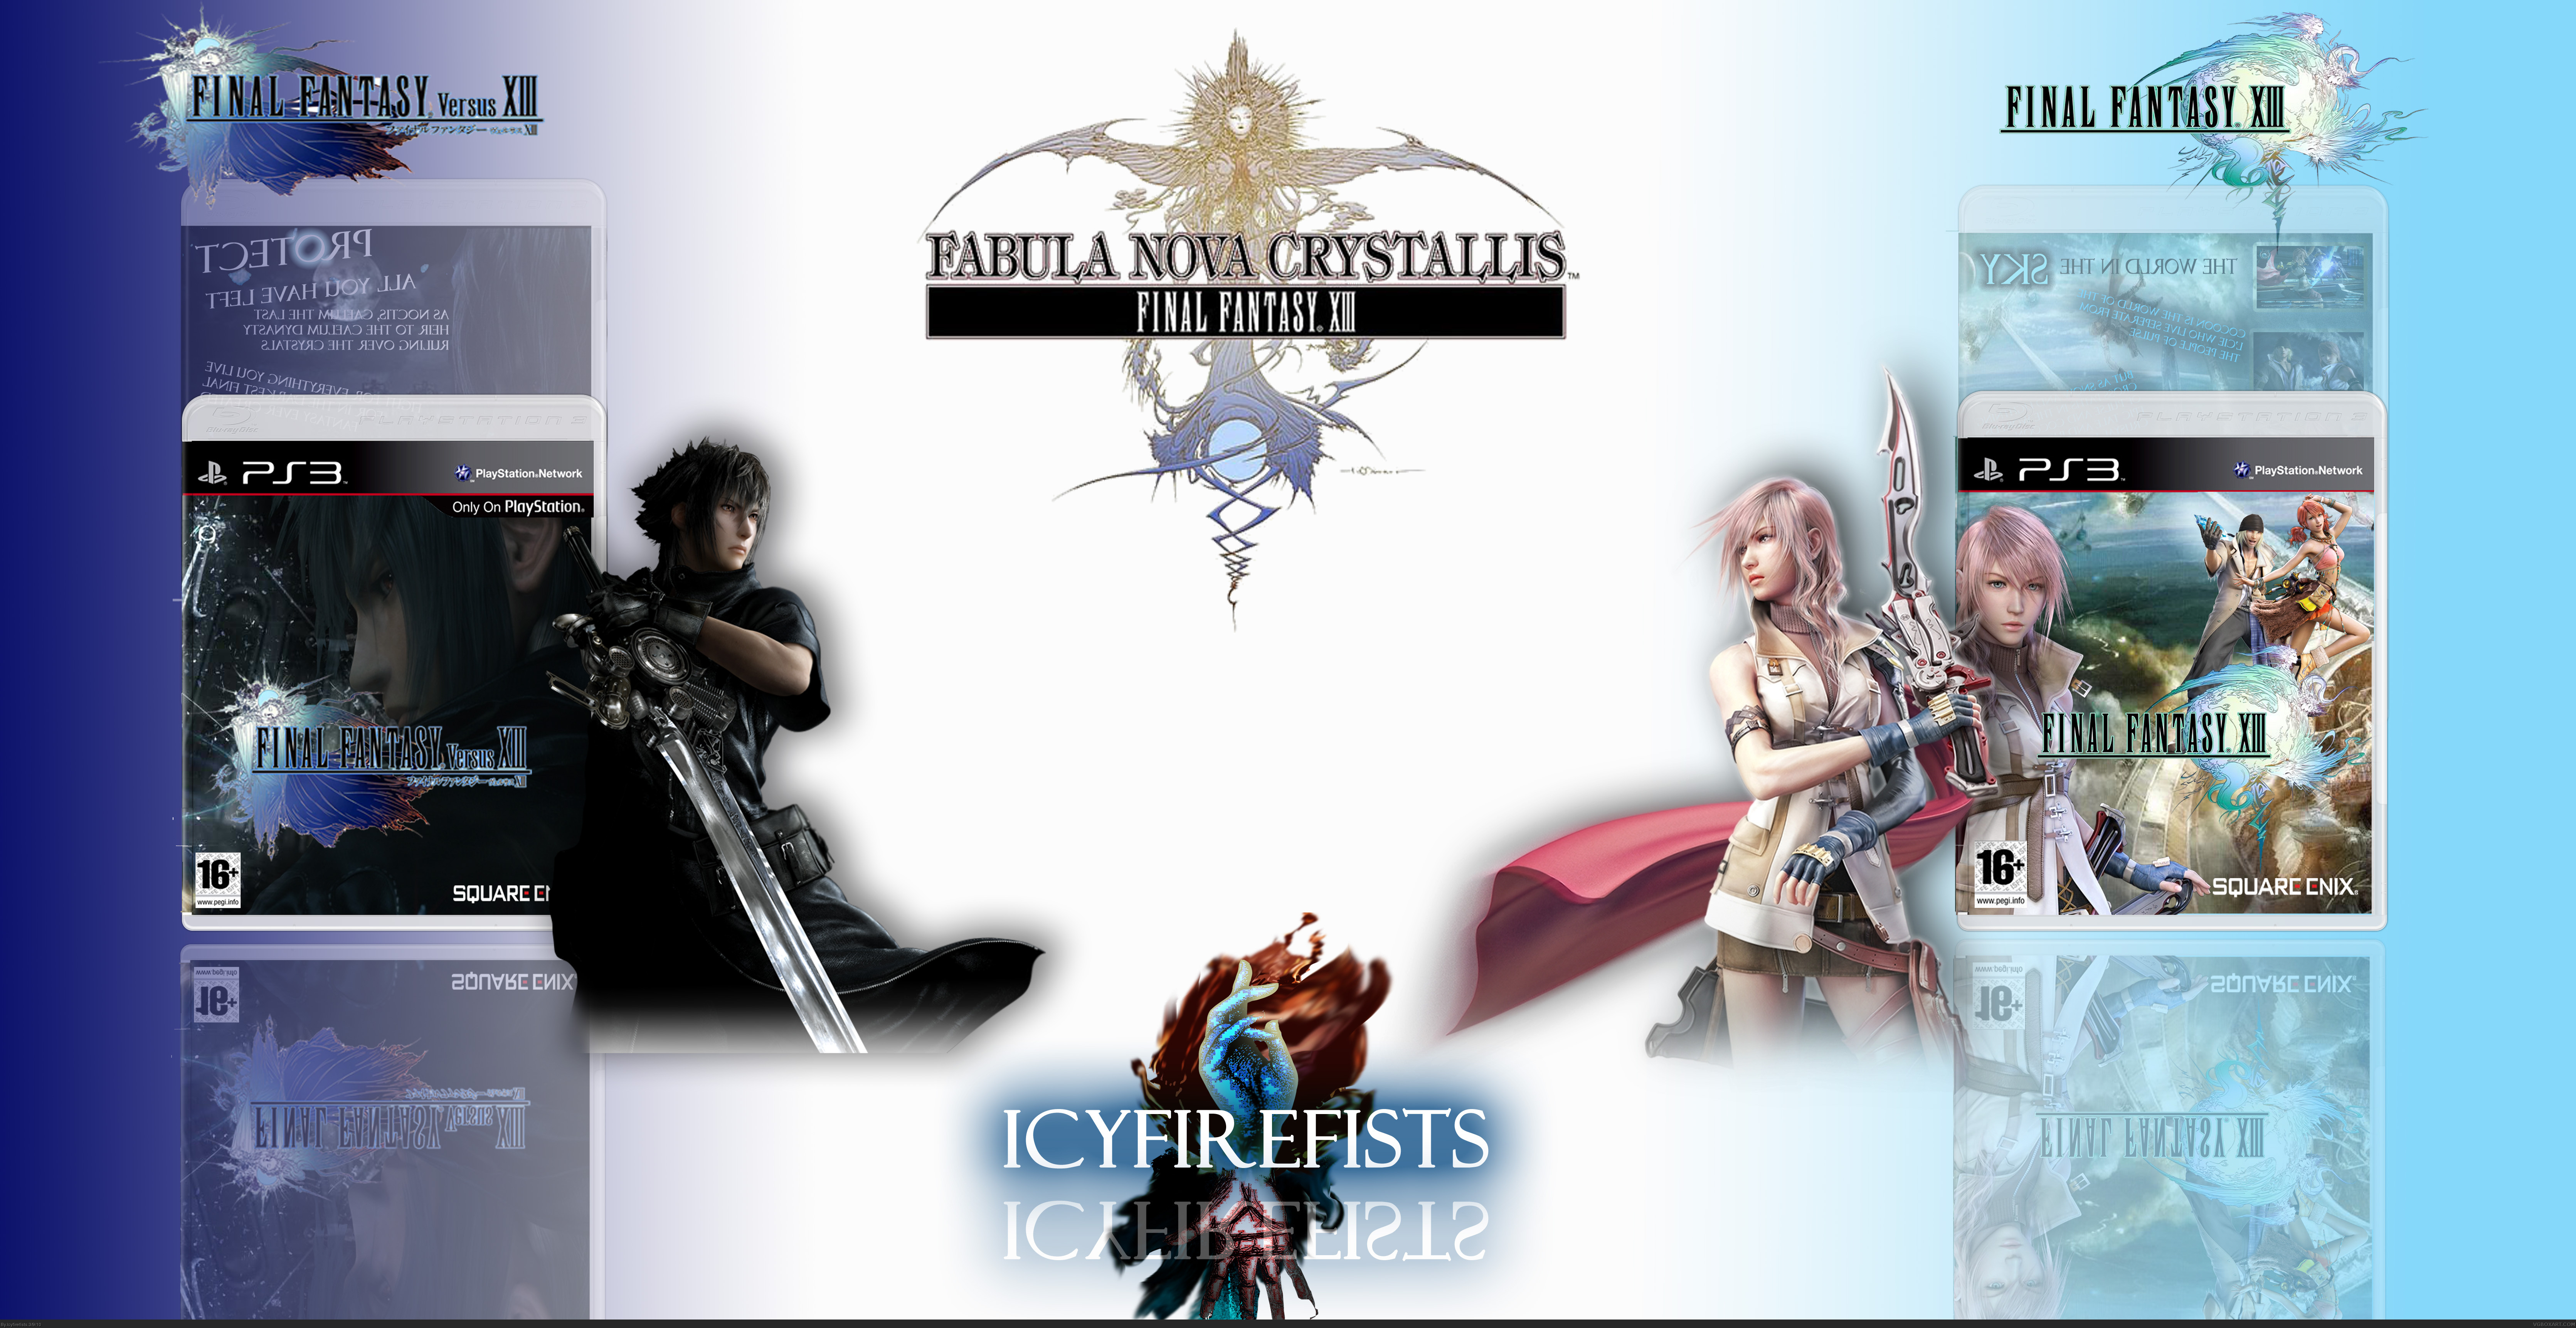 Fabula Nova Crystallis: Final Fantasy, Final Fantasy Wiki